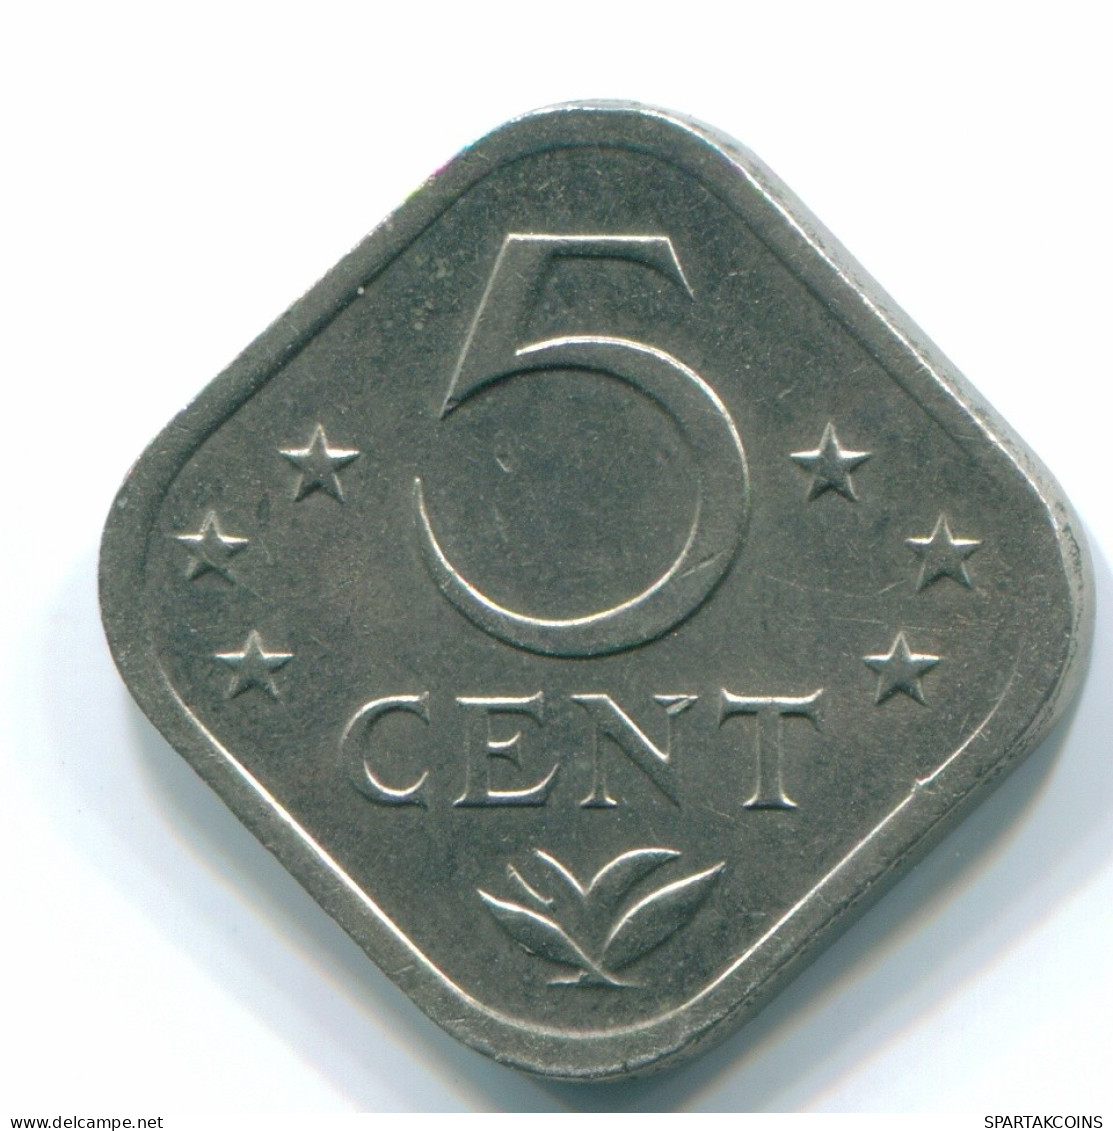 5 CENTS 1978 NETHERLANDS ANTILLES Nickel Colonial Coin #S12280.U.A - Antilles Néerlandaises